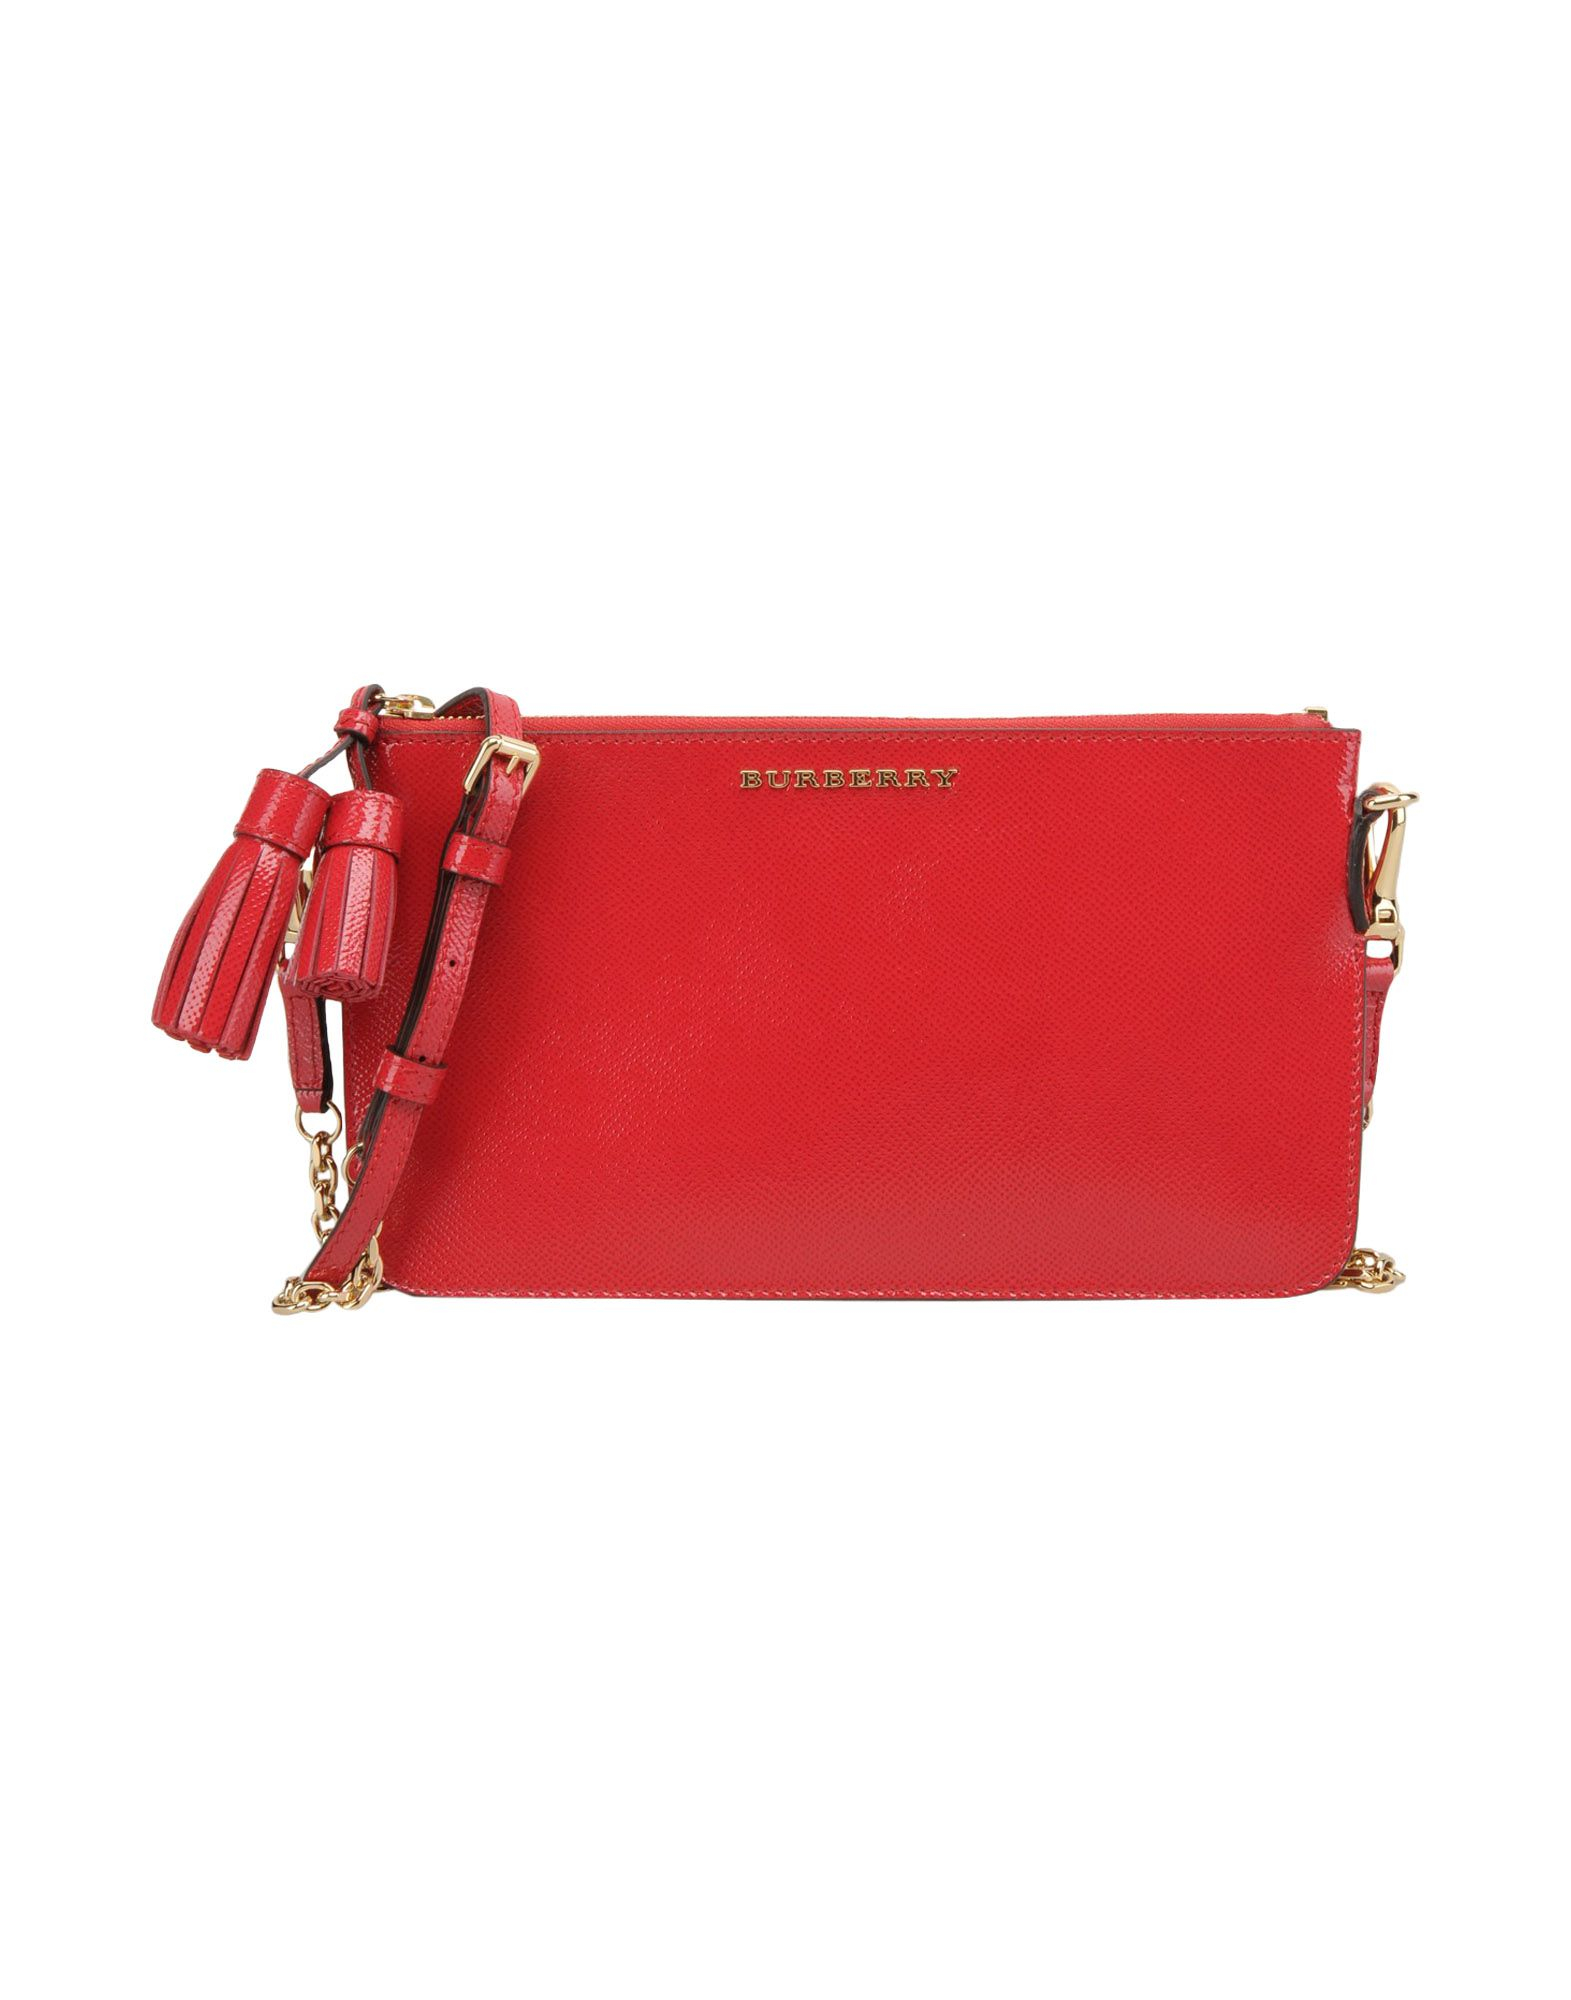 Burberry london Handbag in Red | Lyst